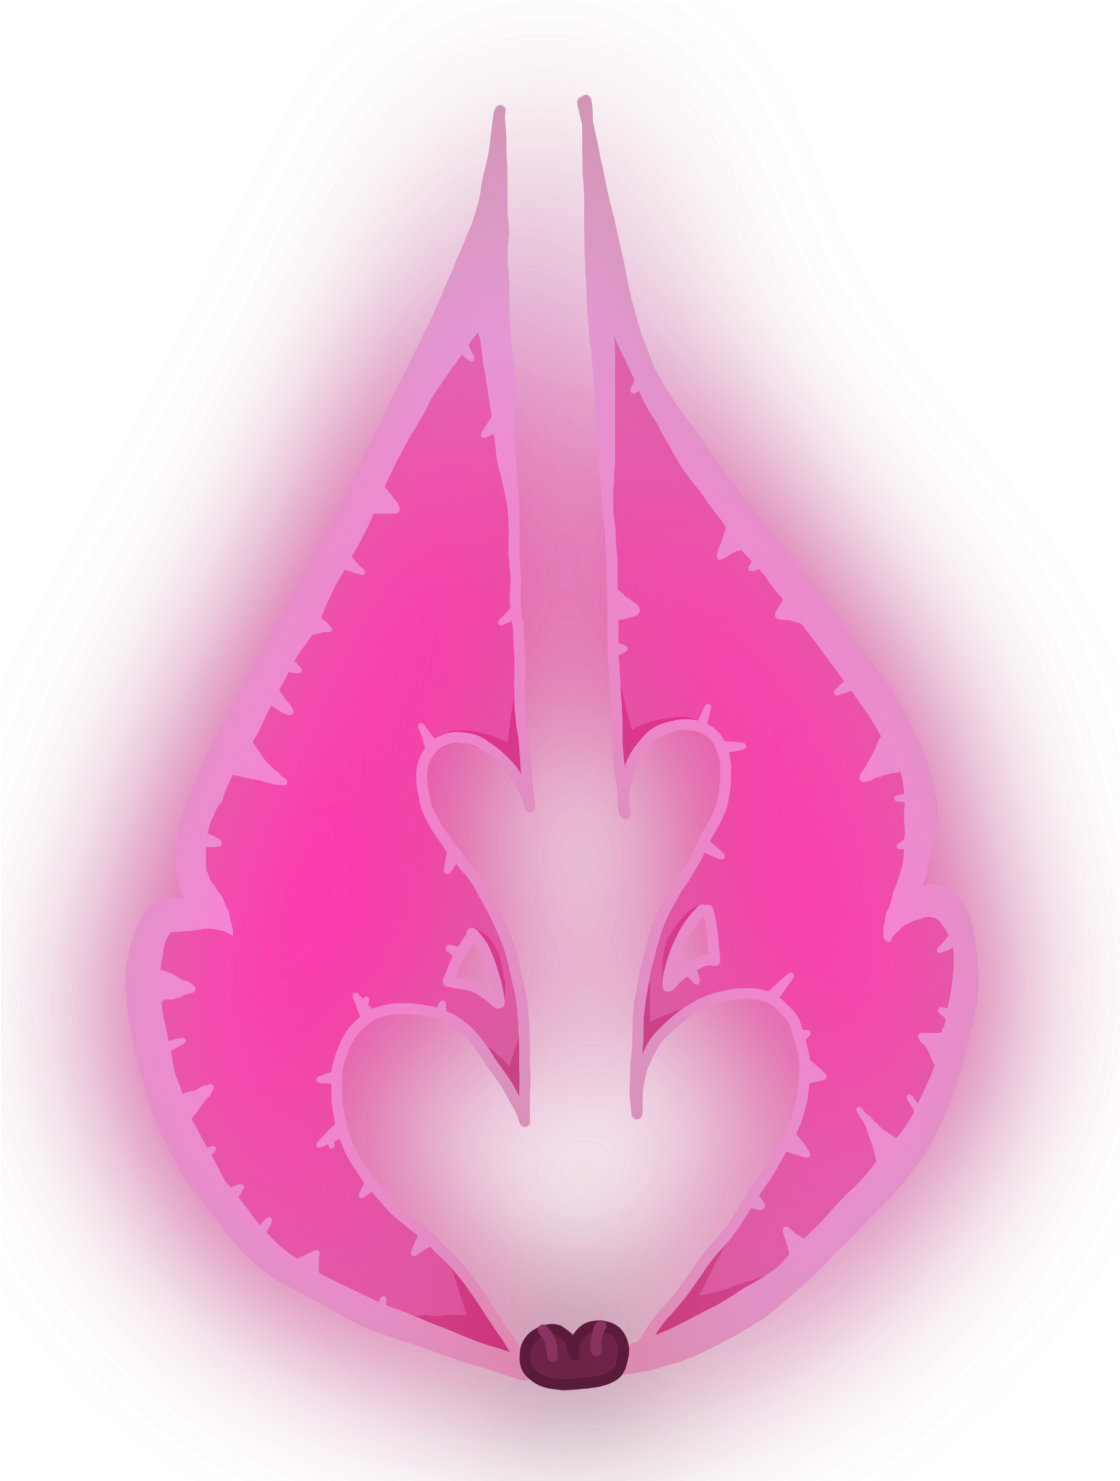 I Hope This Heart-shaped Energy Sword Makes U Feel - Emblem (1128x1480), Png Download